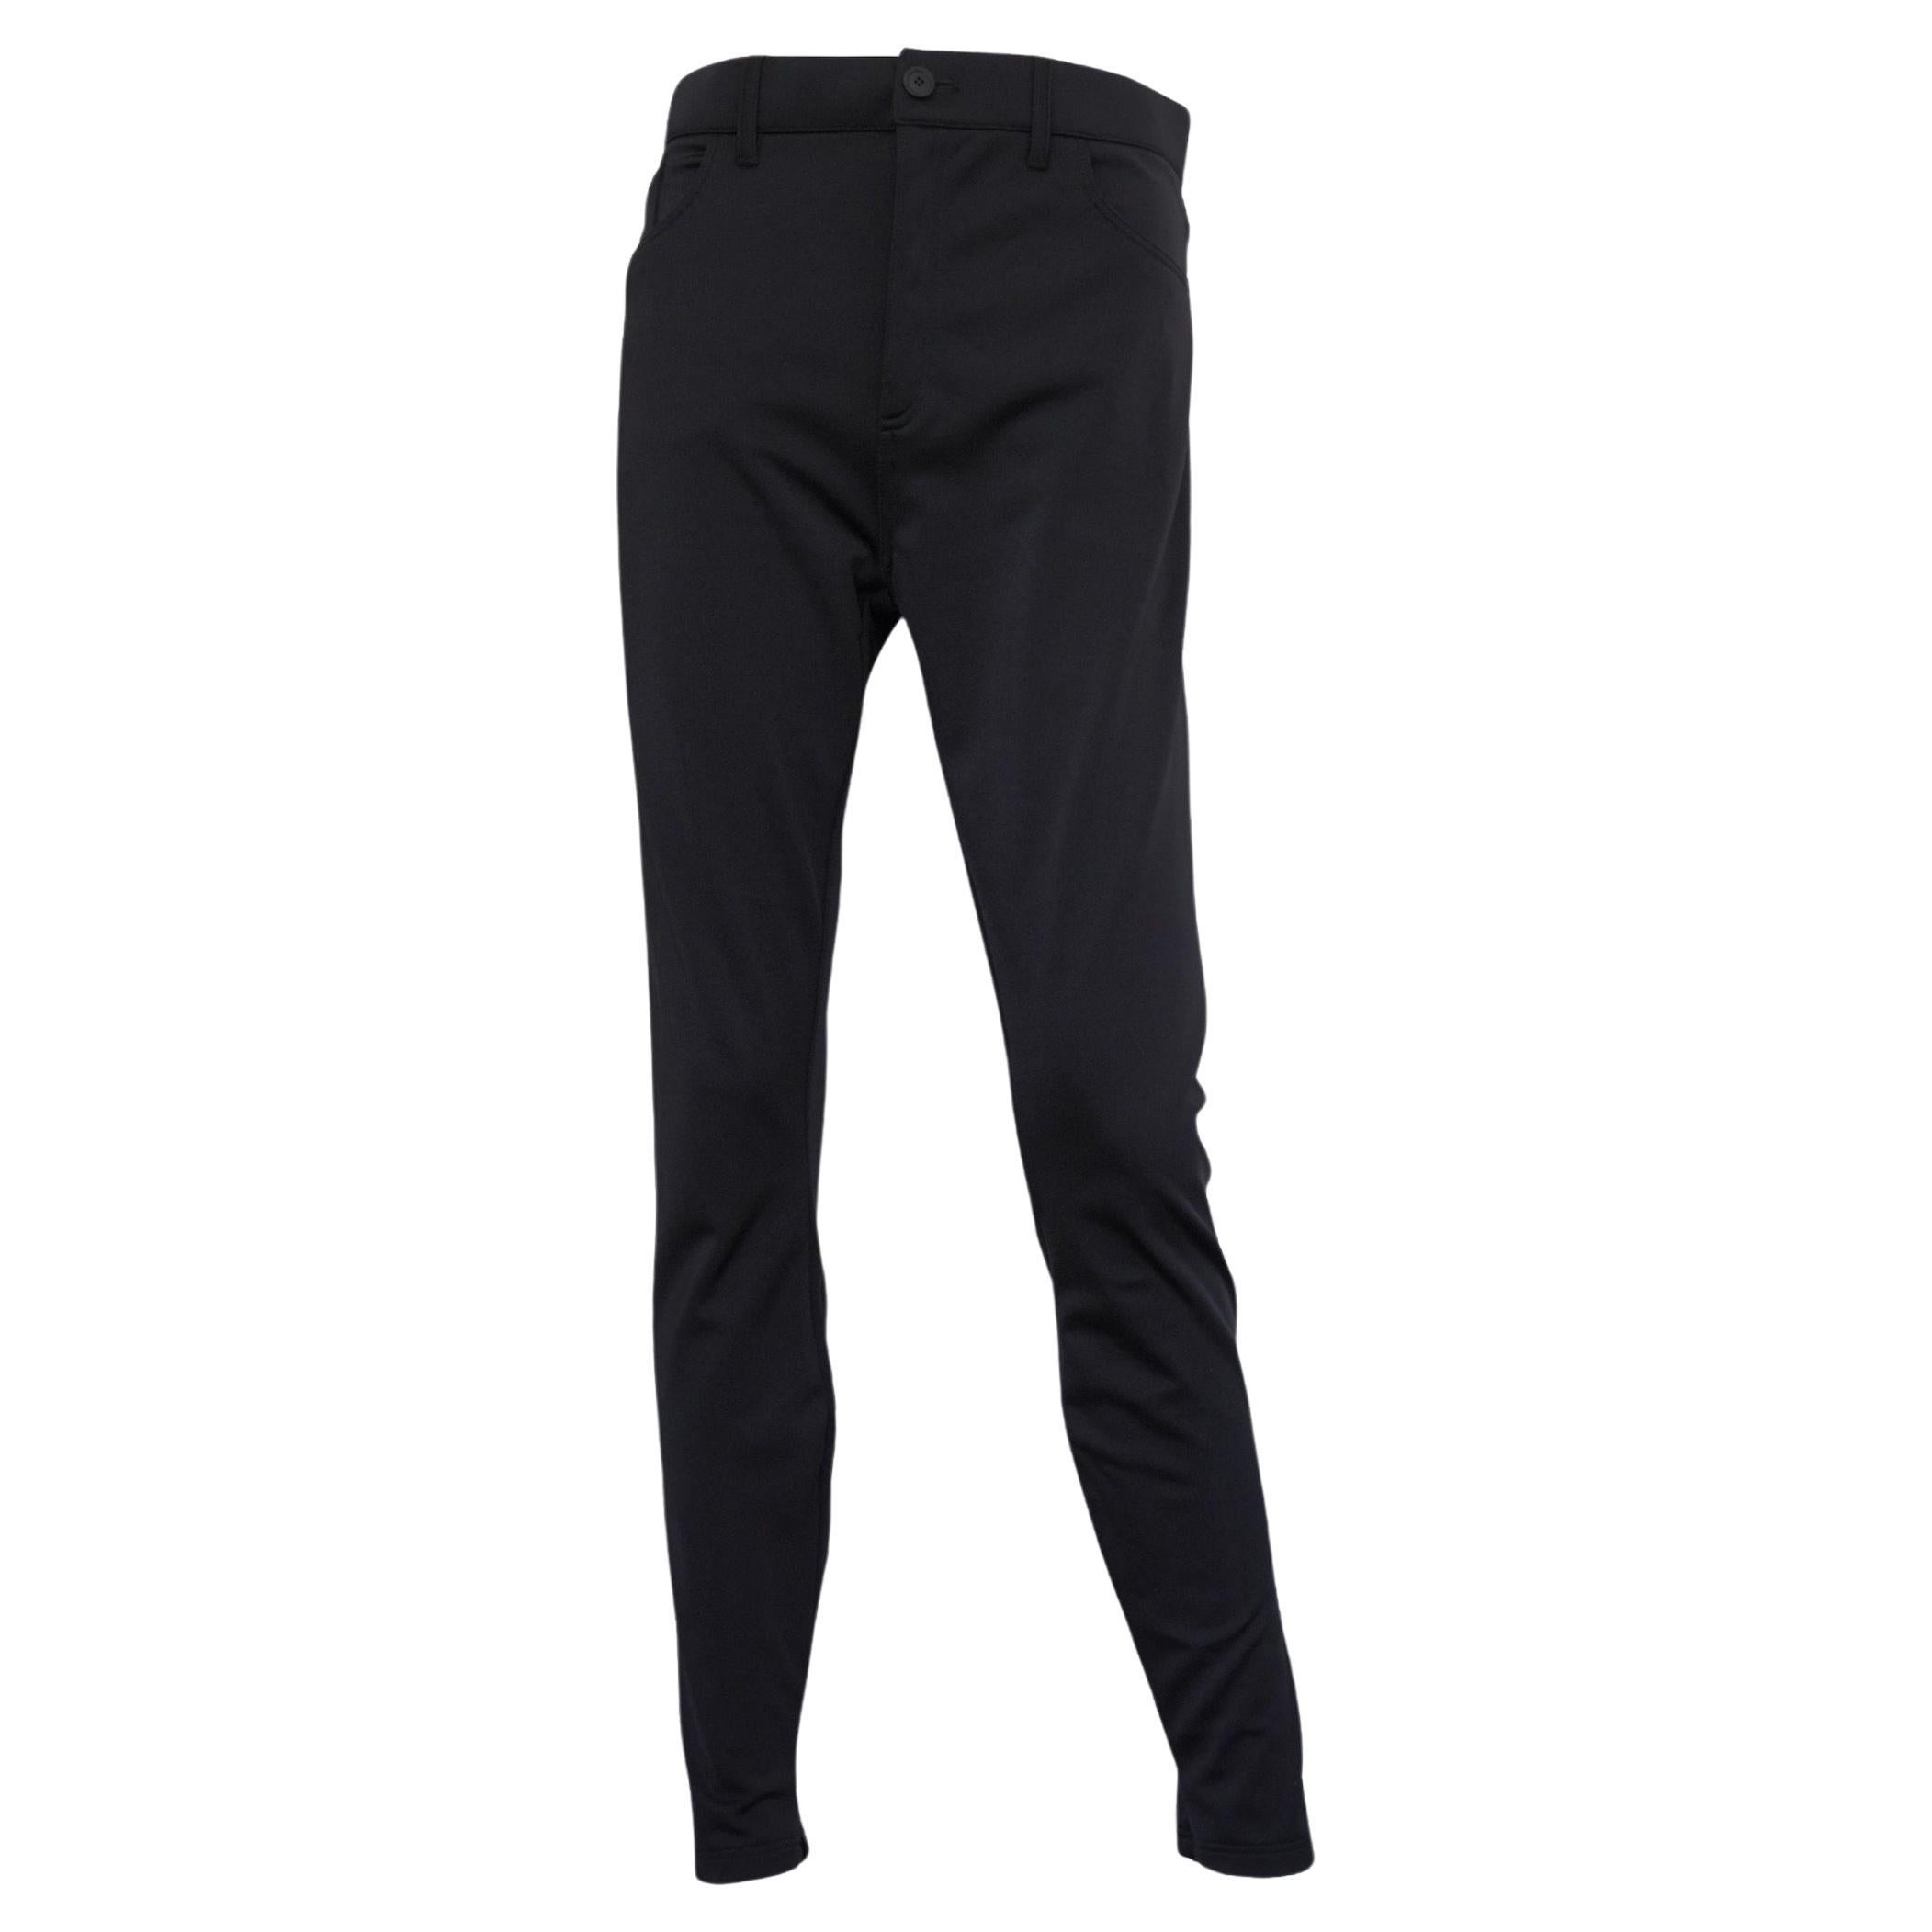 Balenciaga Ankle Zip Black Pant sz 40 For Sale